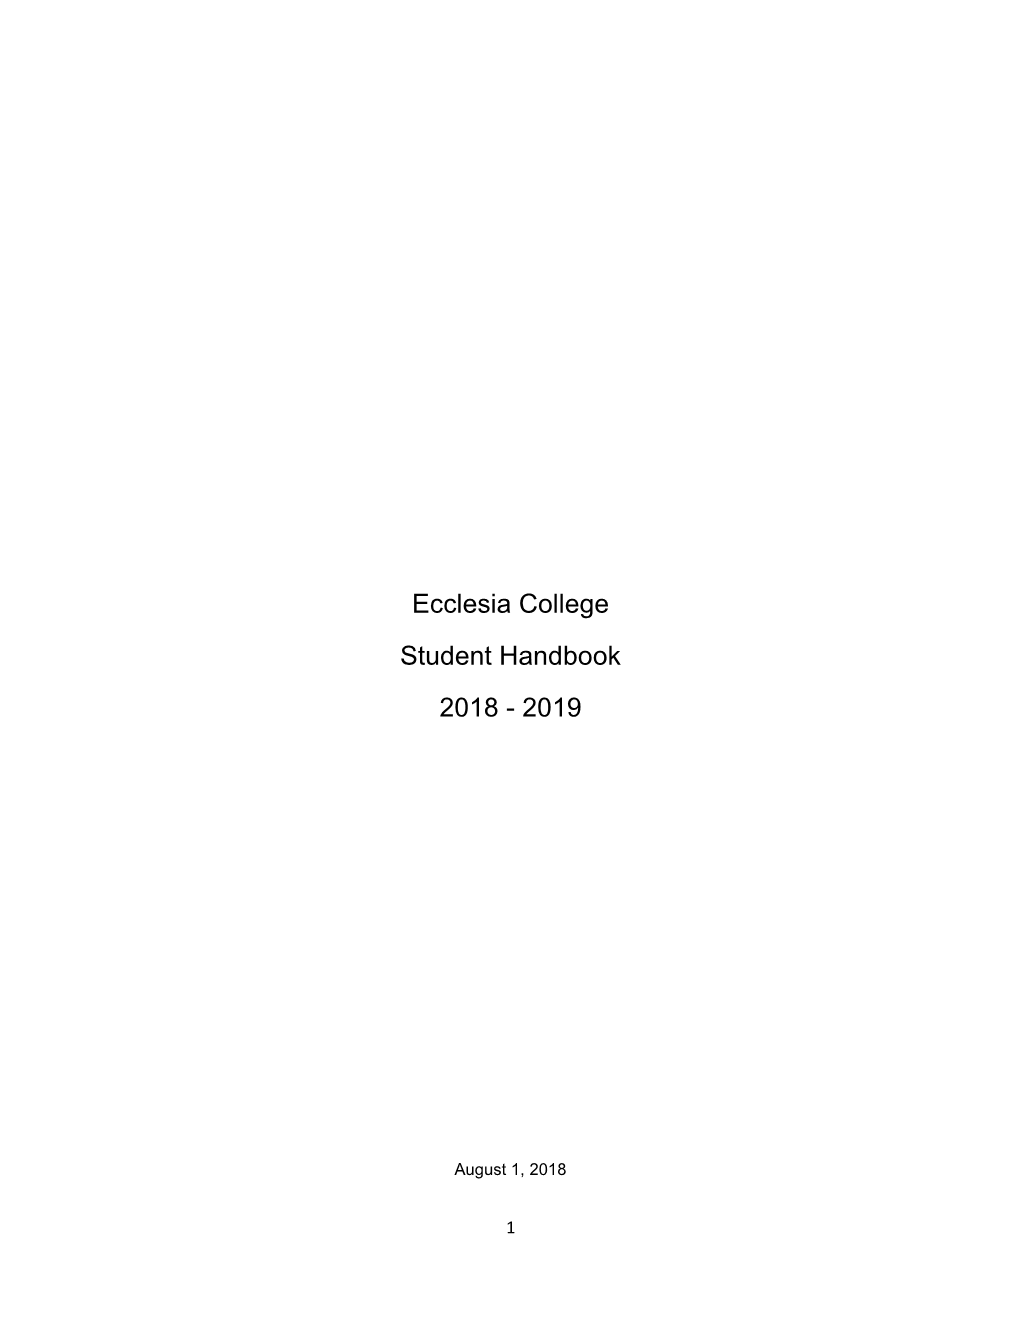 Ecclesia College Student Handbook 2018 - 2019